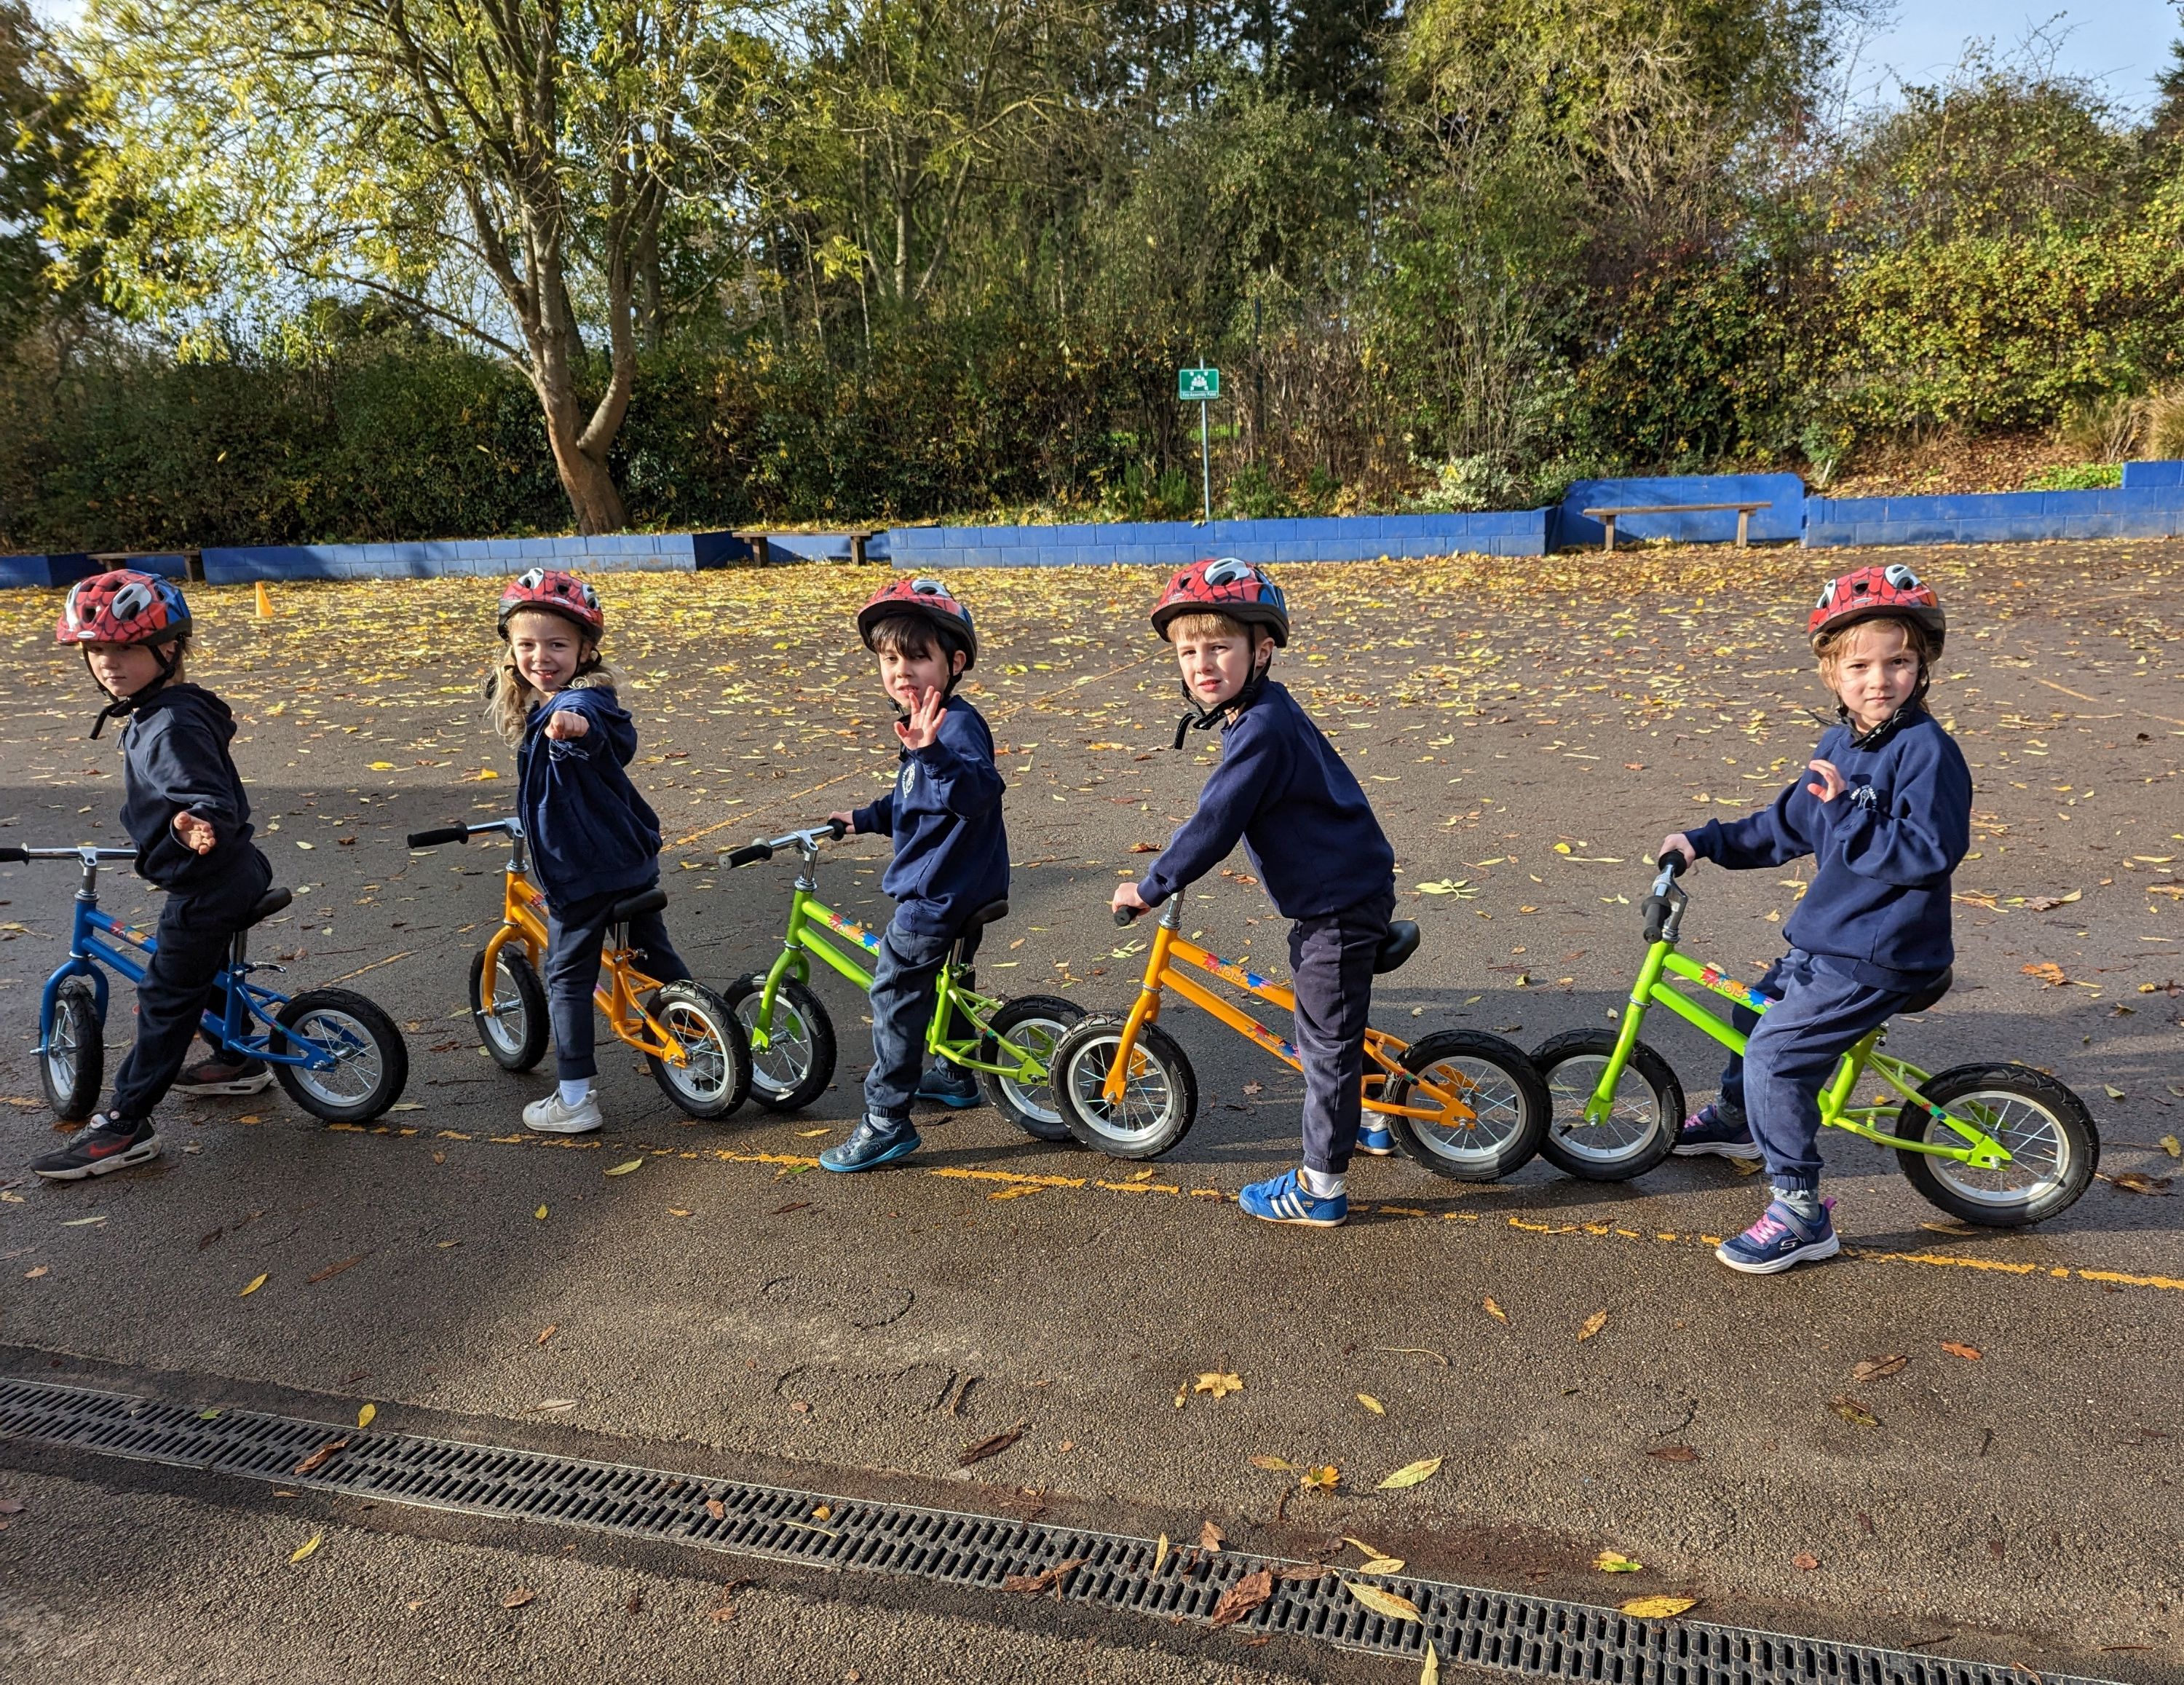 Mini Bikers pupils on their balance bikes